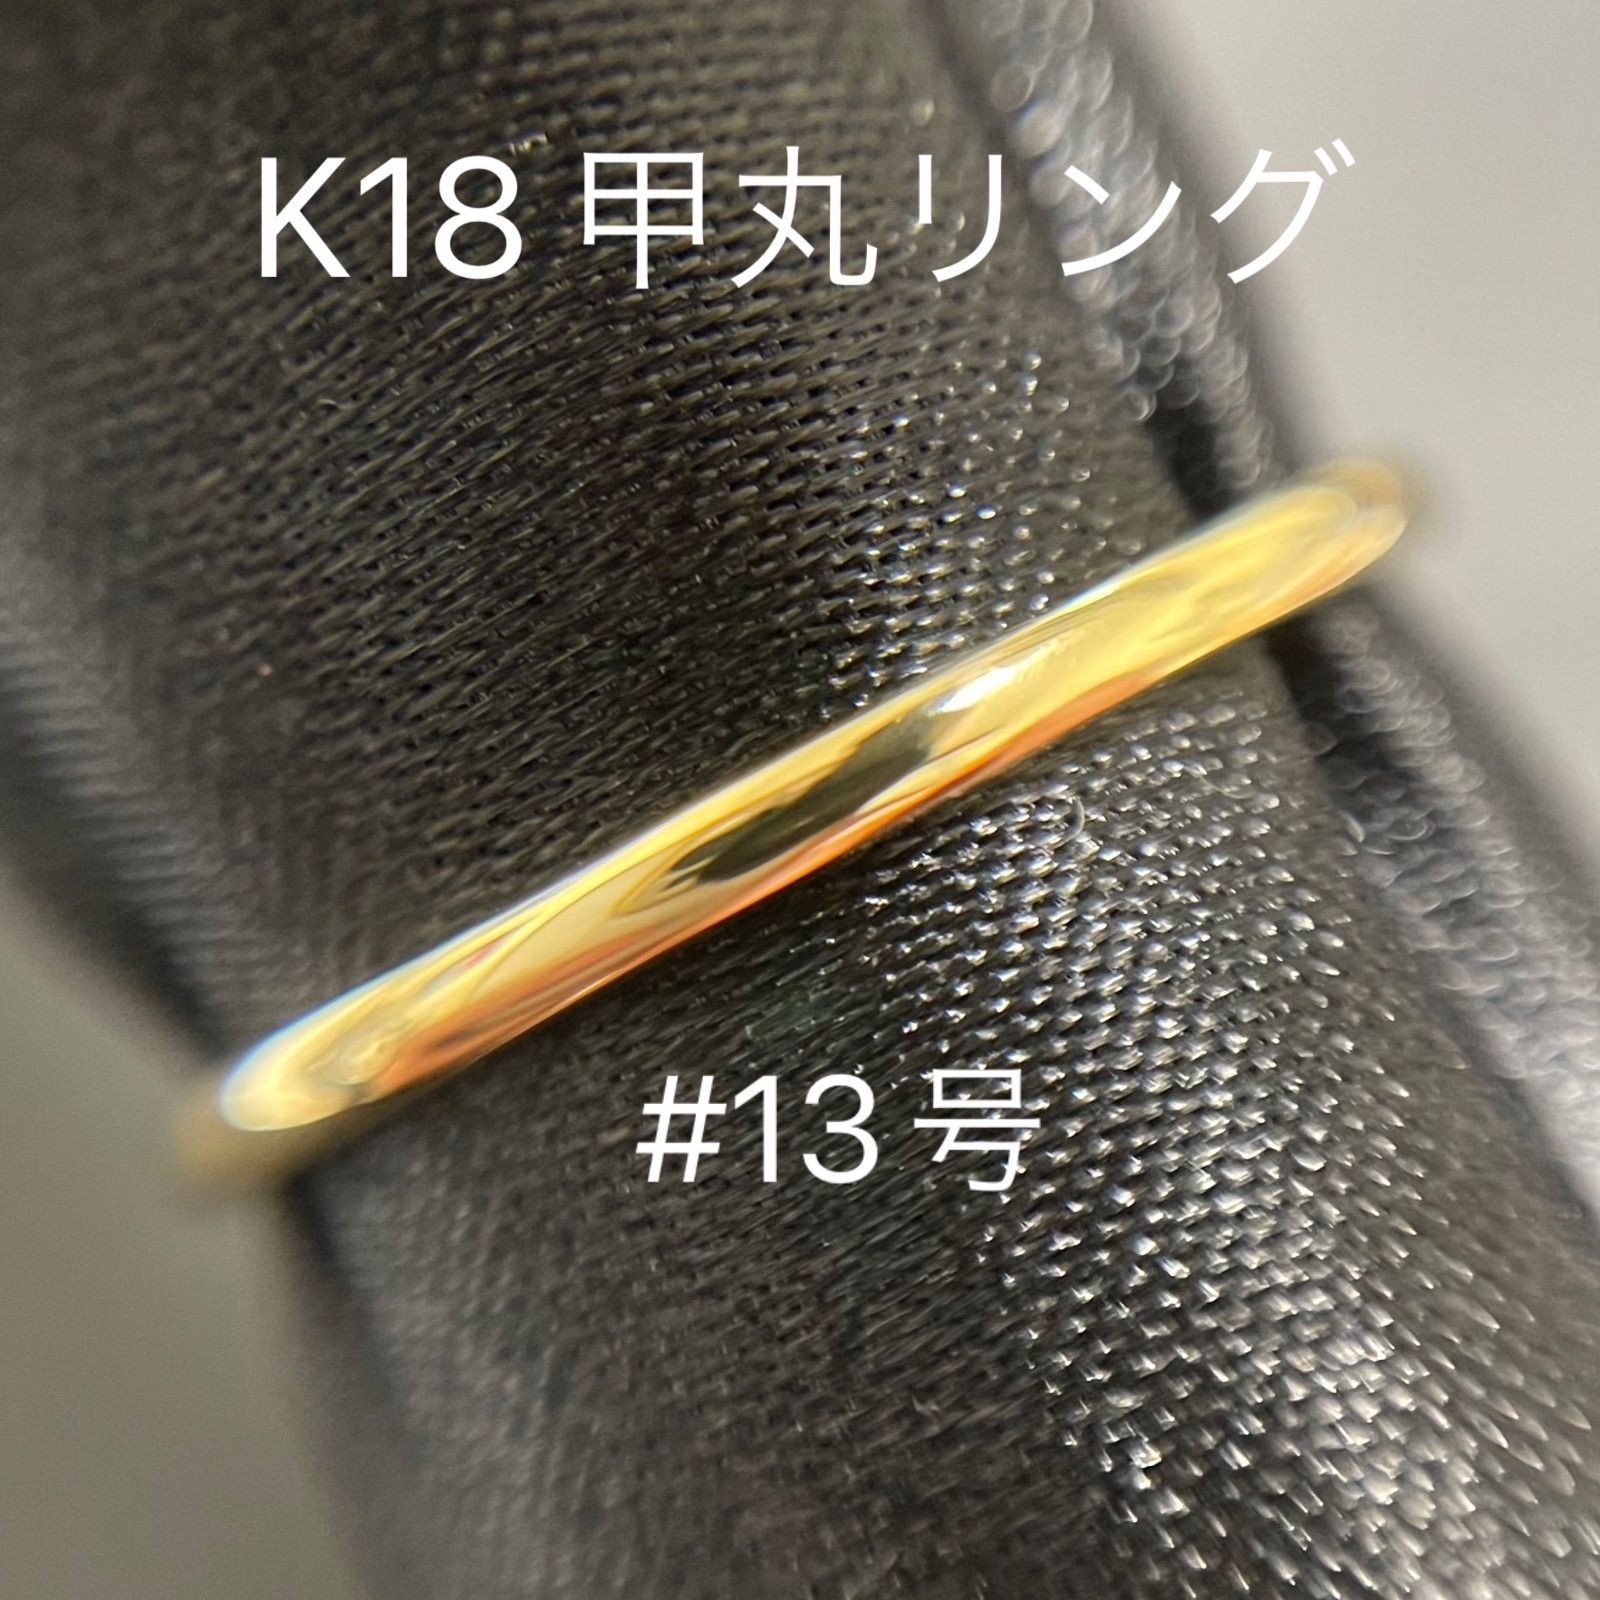 K18 甲丸 リング #13号 シンプルリング 18金 地金 指輪 メンズ ...